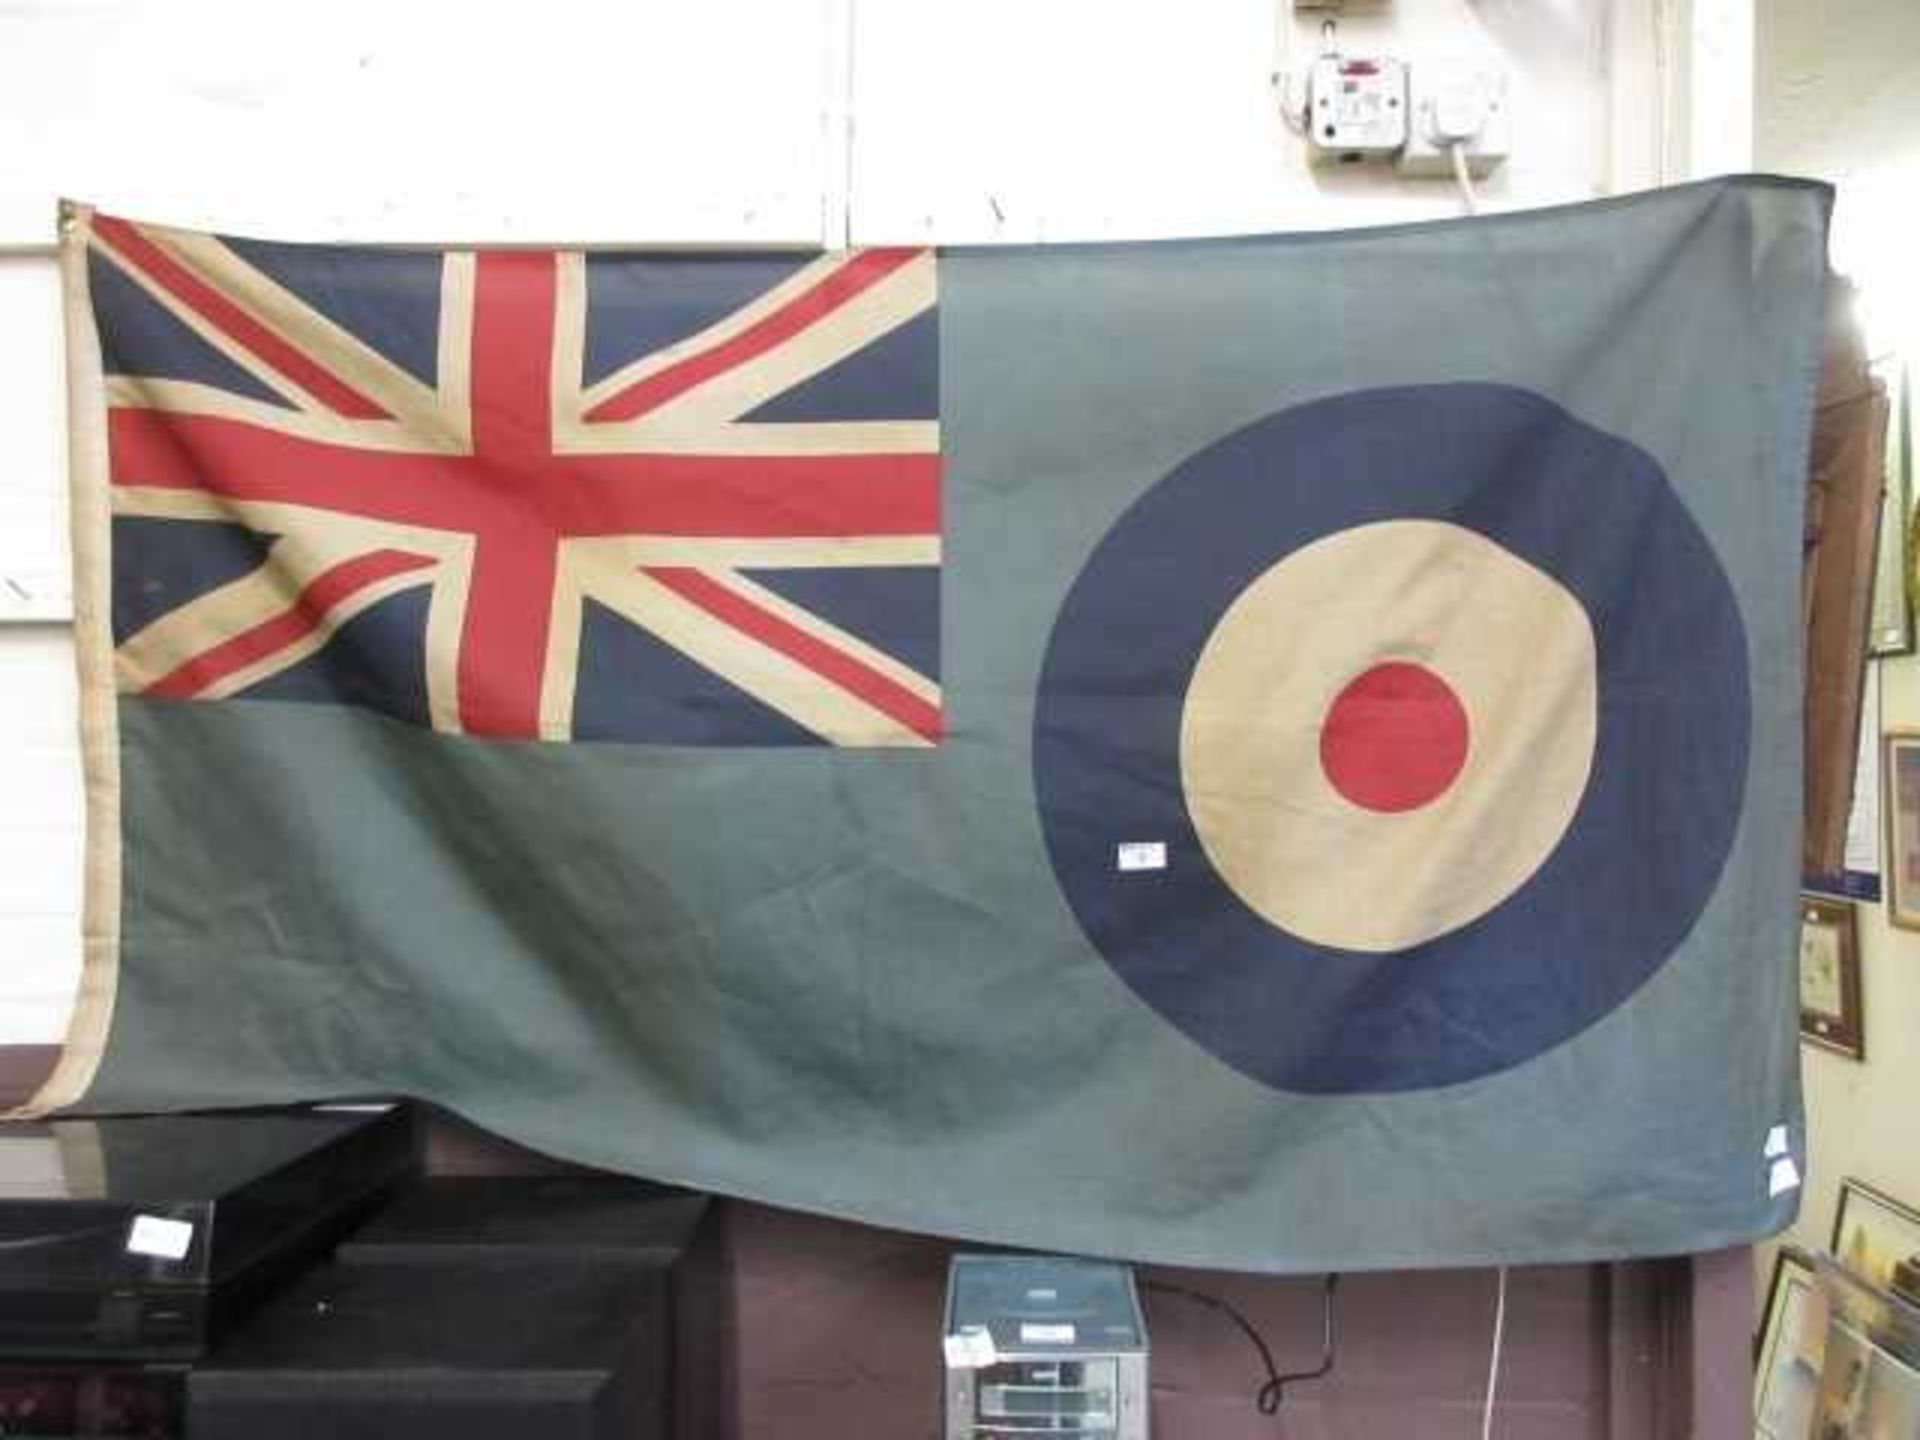 An RAF ensign